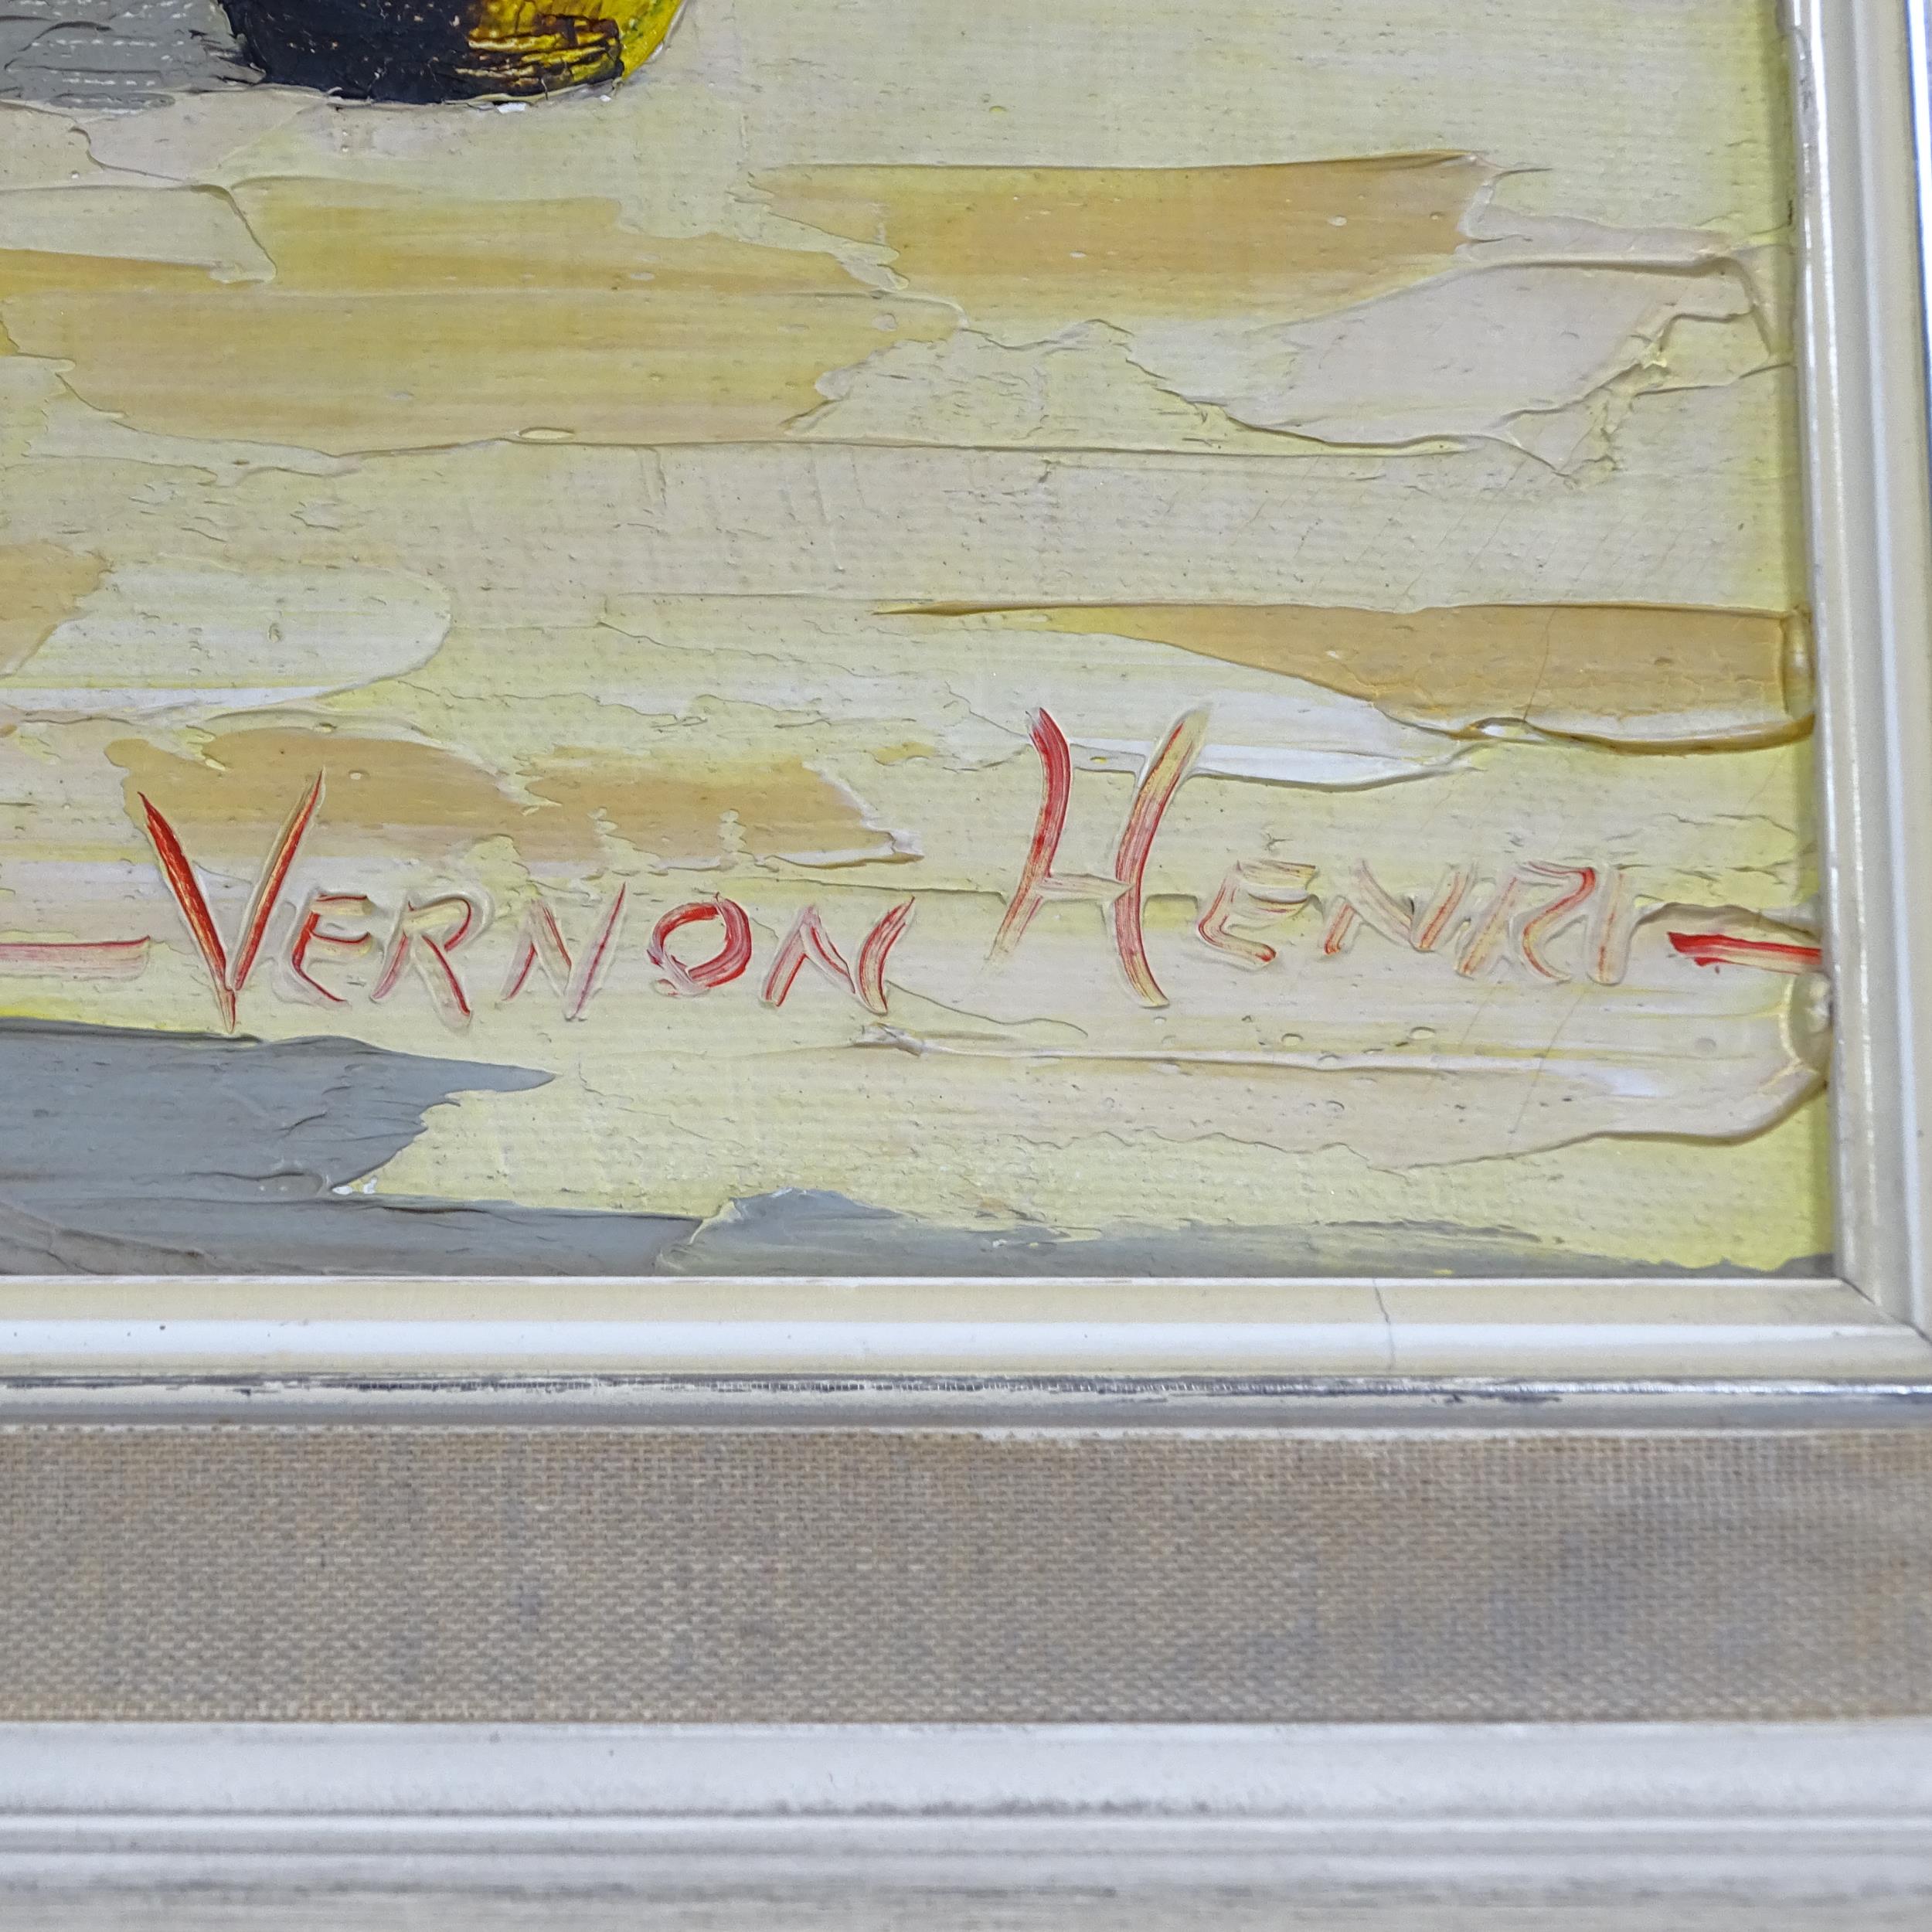 Vernon Henri, oil on canvas, Mediterranean coastal village, 60cm x 100cm overall, framed - Image 2 of 2